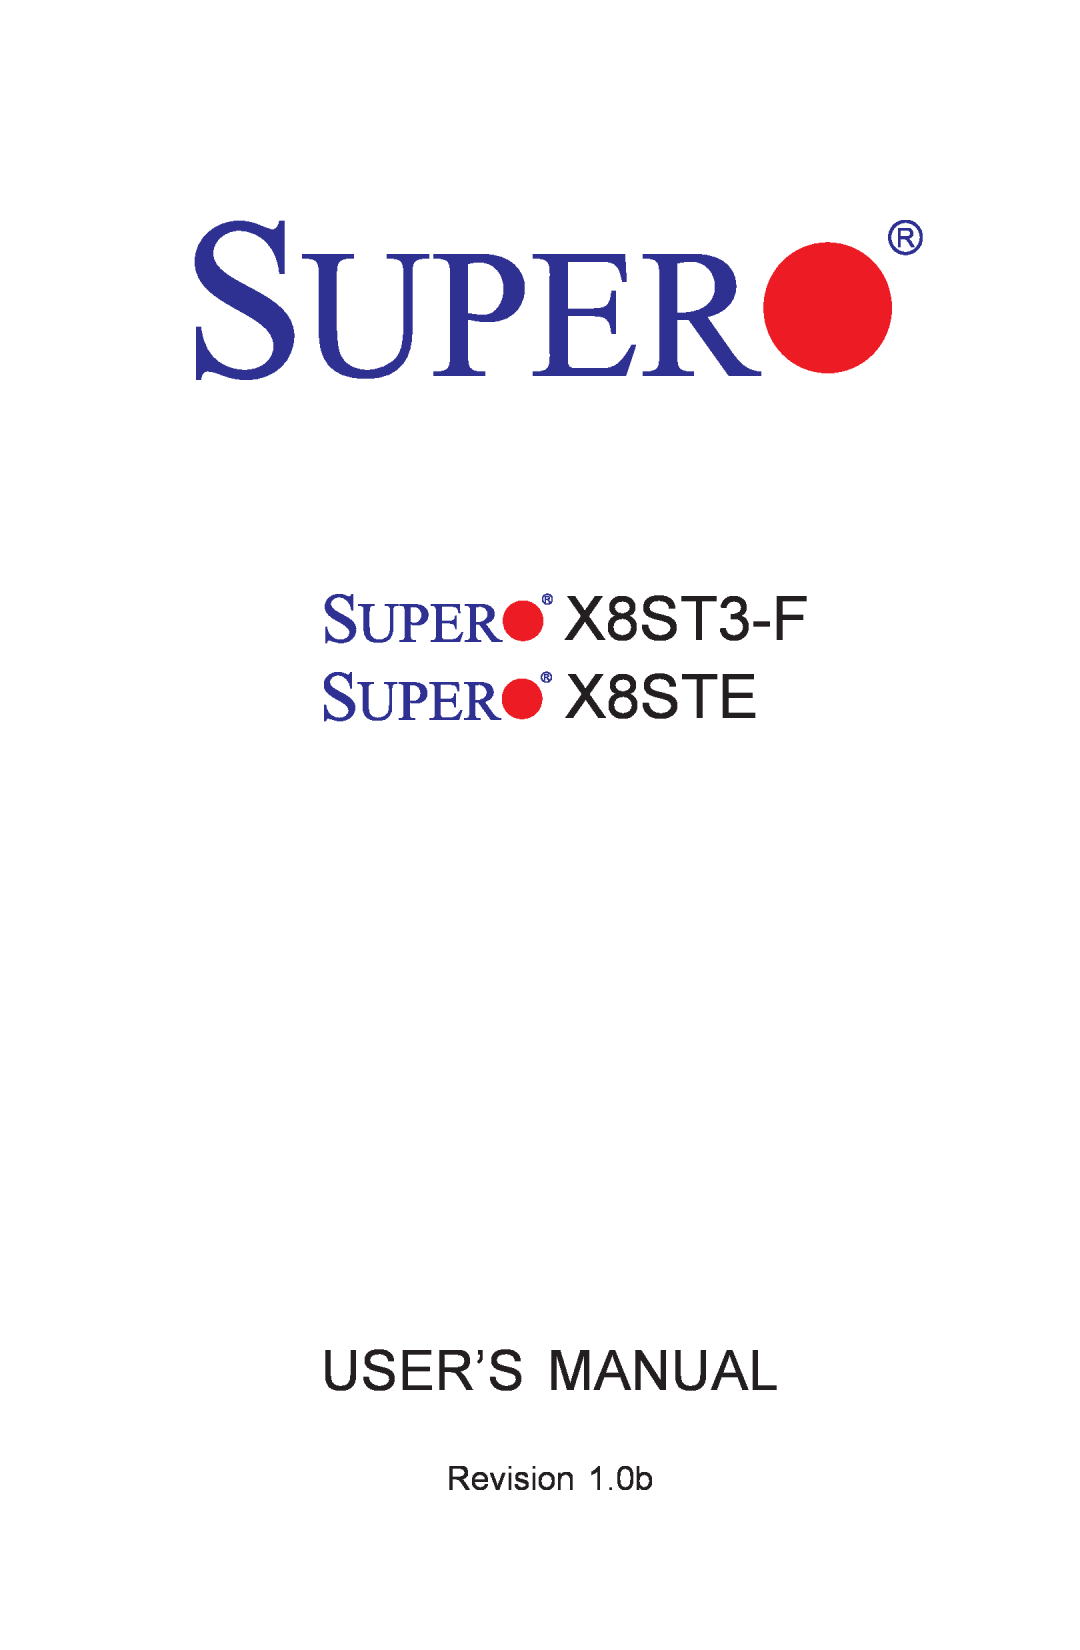 SUPER MICRO Computer user manual Revision 1.0b, X8ST3-F X8STE, User’S Manual 